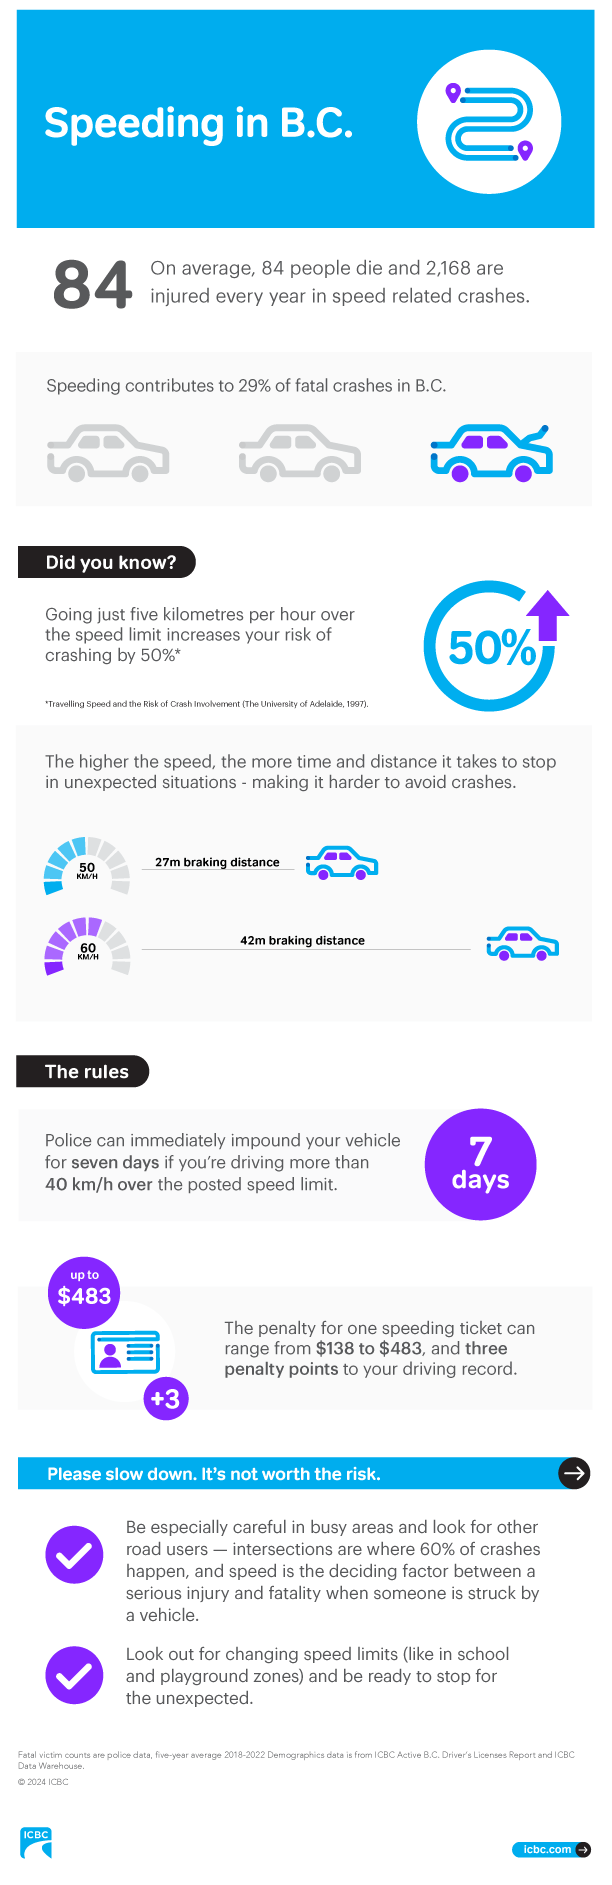 Speeding in B.C. infographic